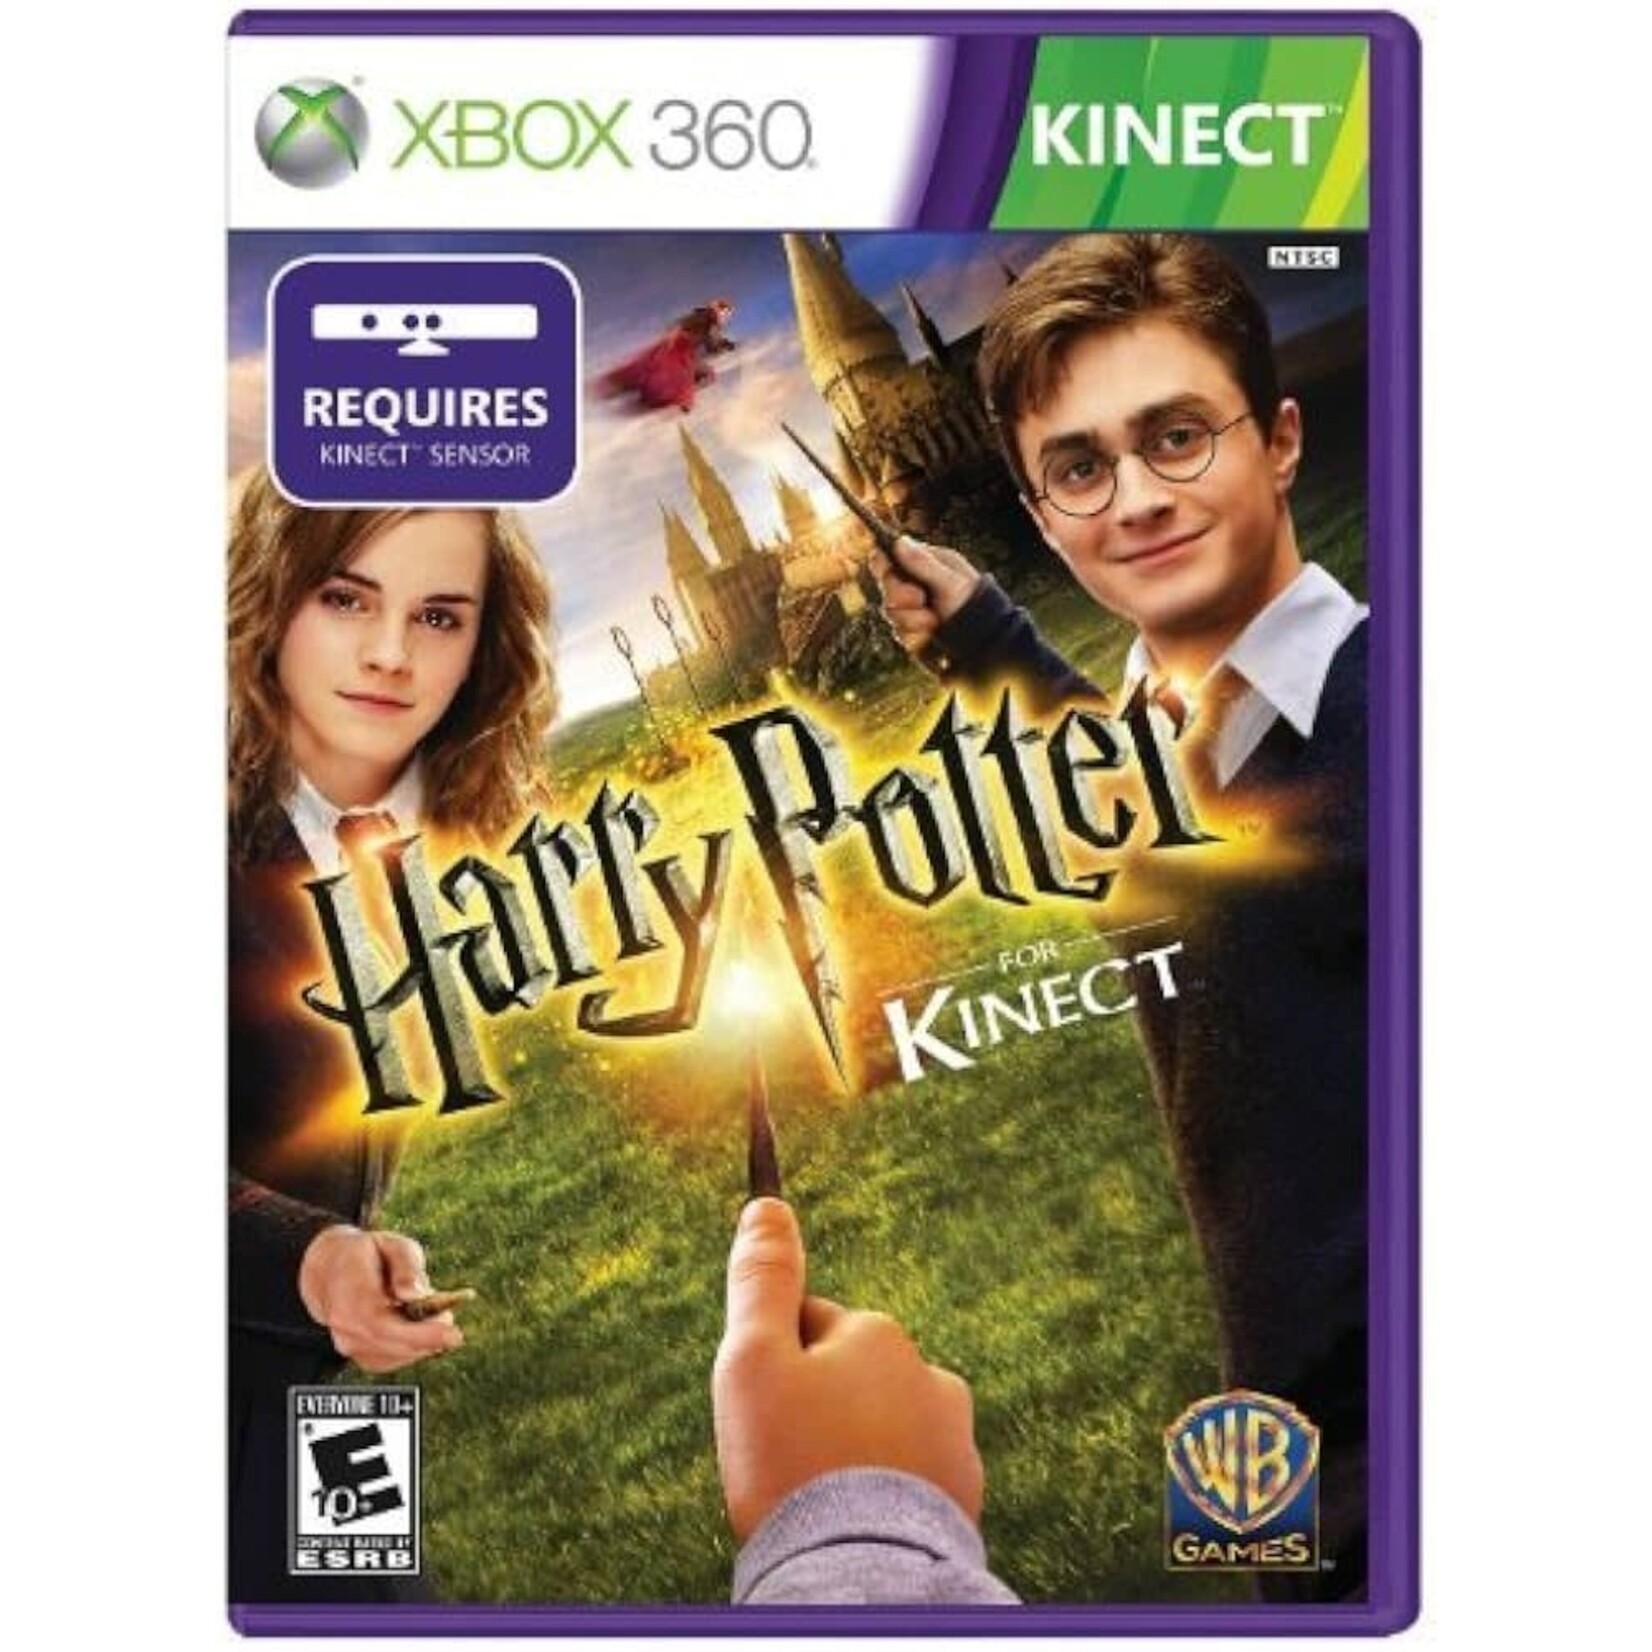 X3U-Harry Potter for Kinect